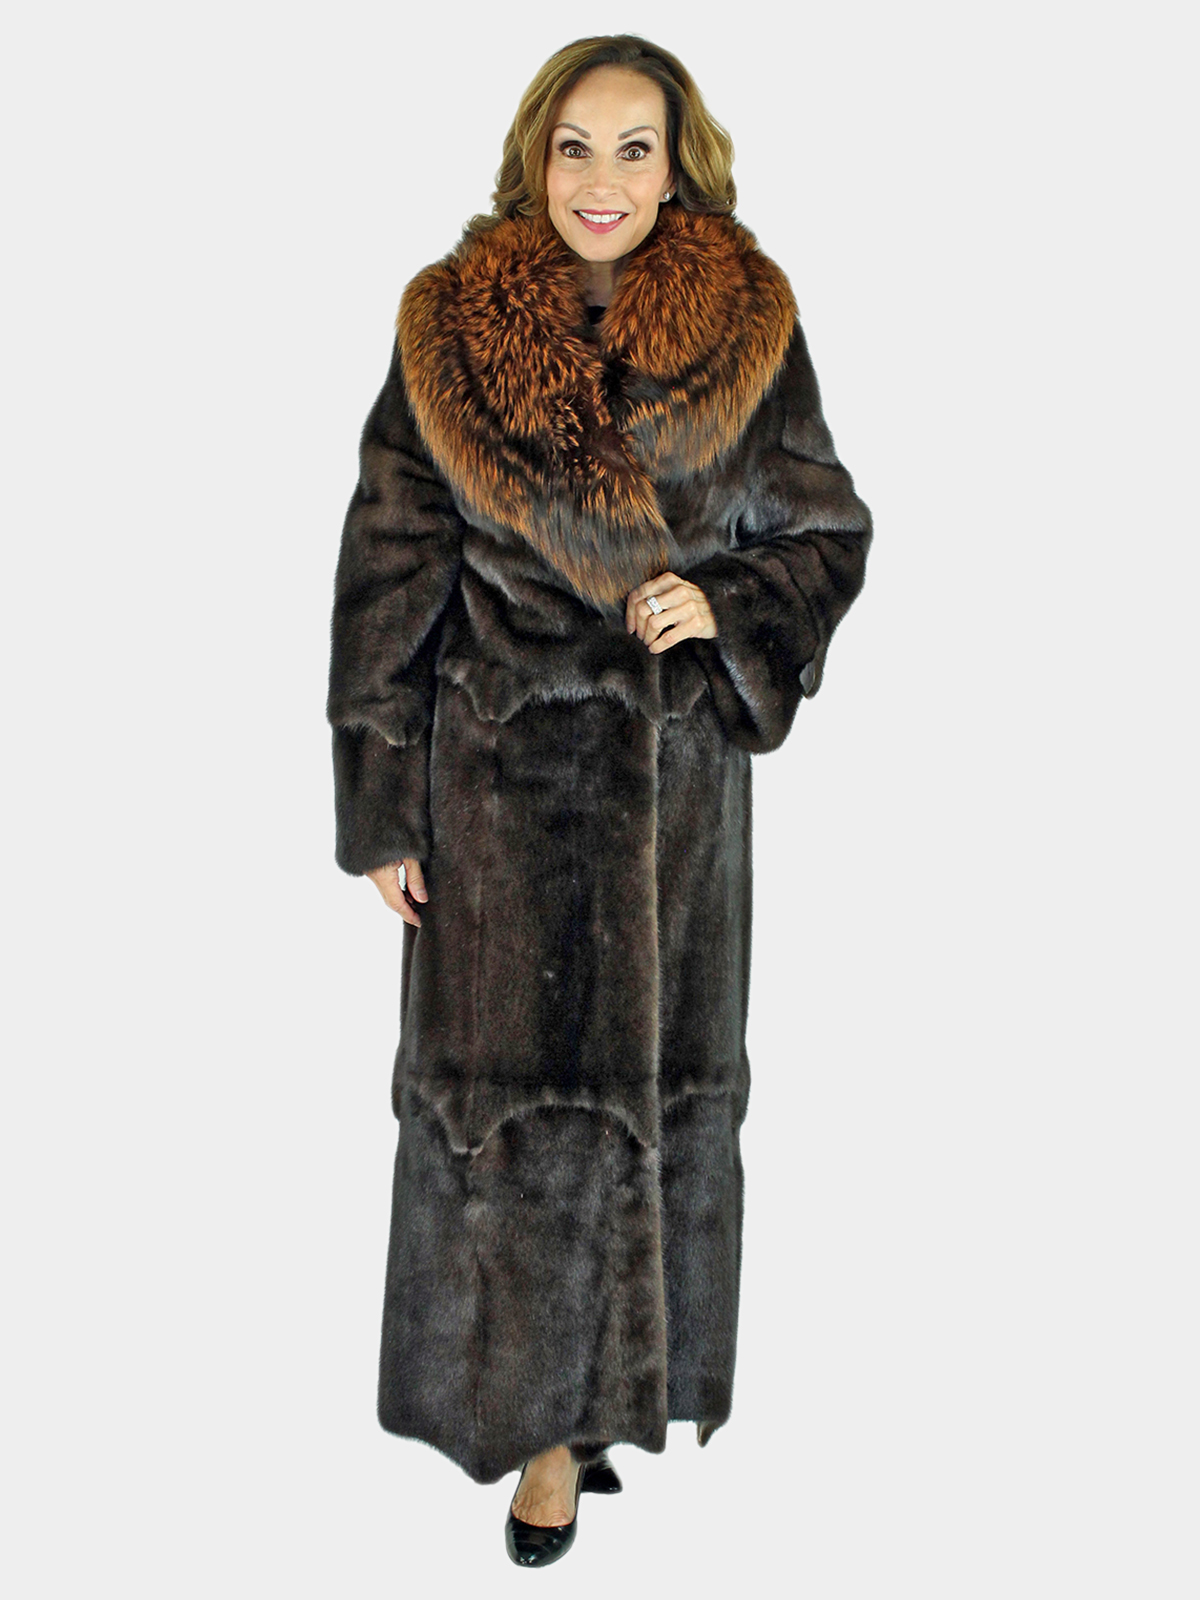 Mahogany Female Mink Fur Coat w/ Large Fox Collar - Small | Estate Furs